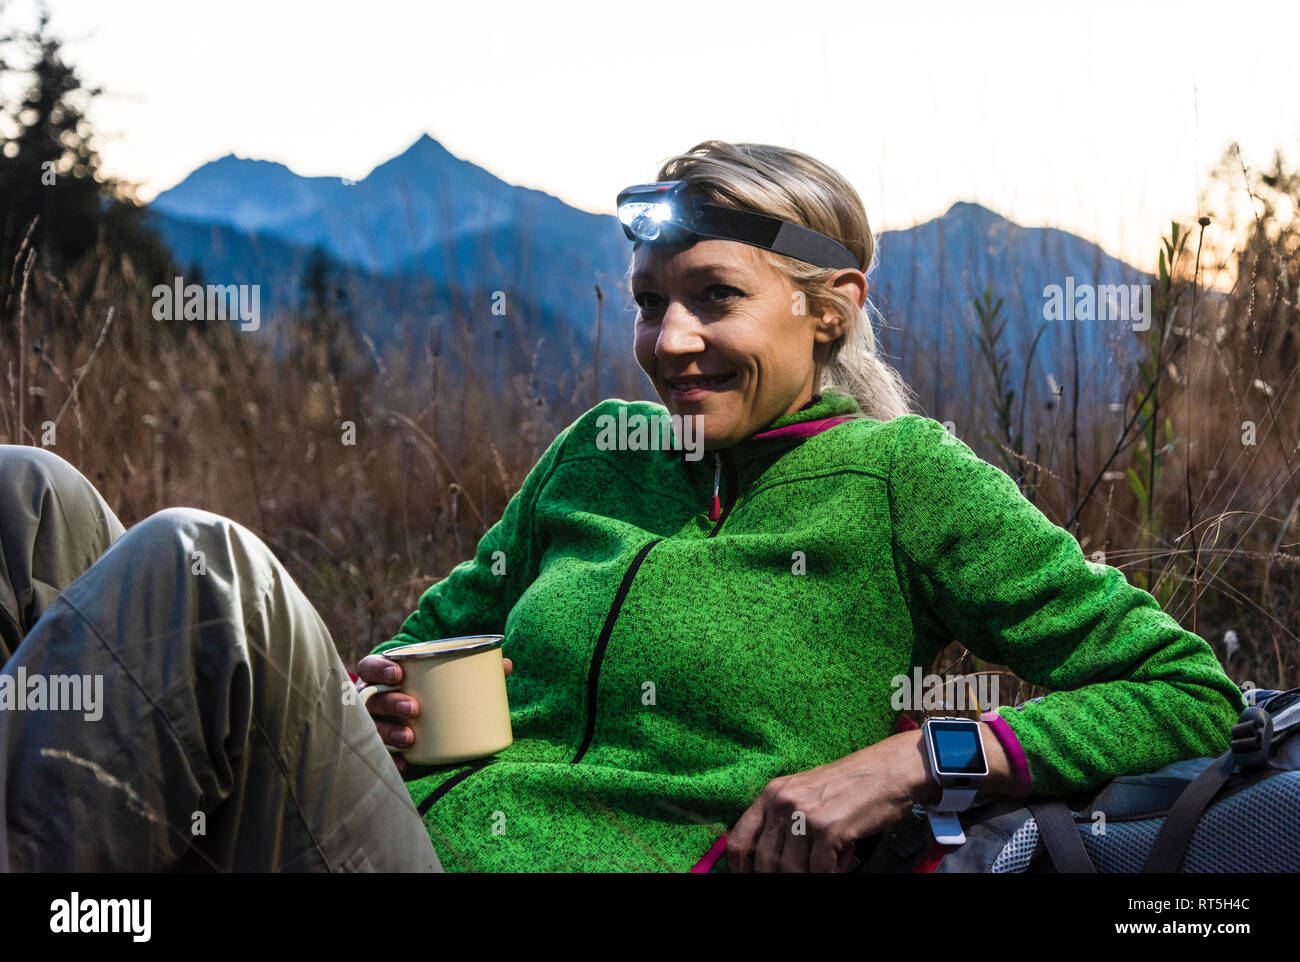 Hiking woman taking a break, drinking tea, wearing head lamp Stock Photo